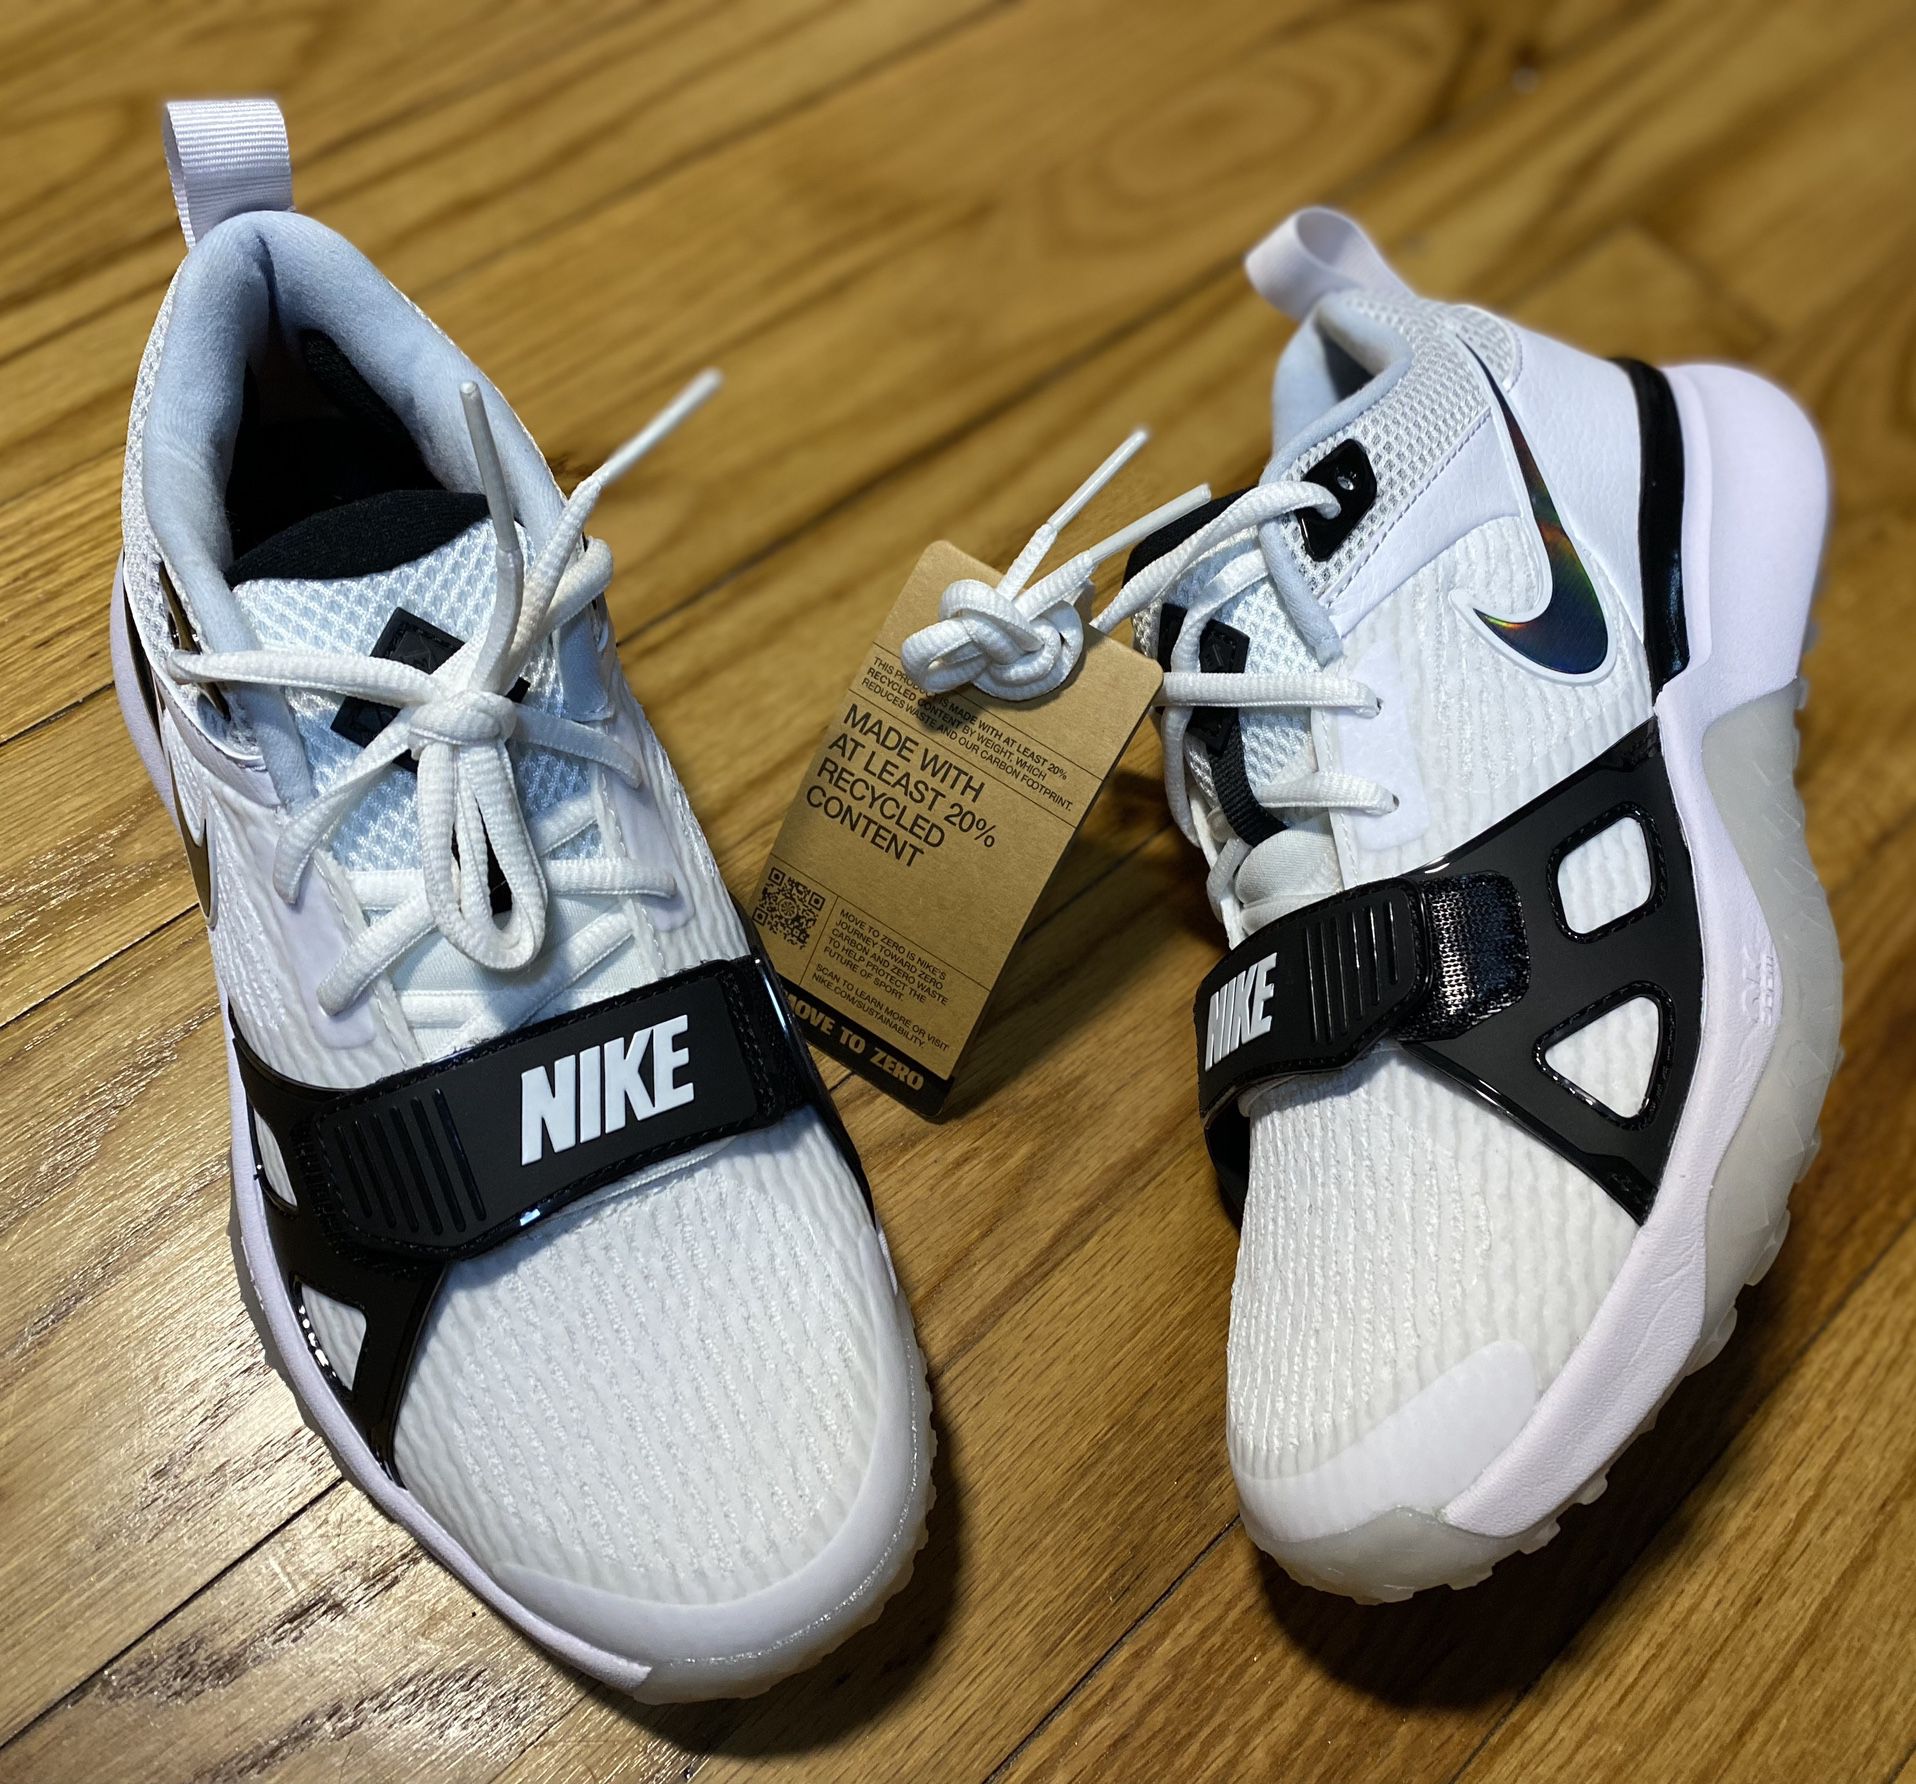 Nike Air Zoom Diamond Elite Turf White Baseball Shoes Men’s Sz 7 New No Box!